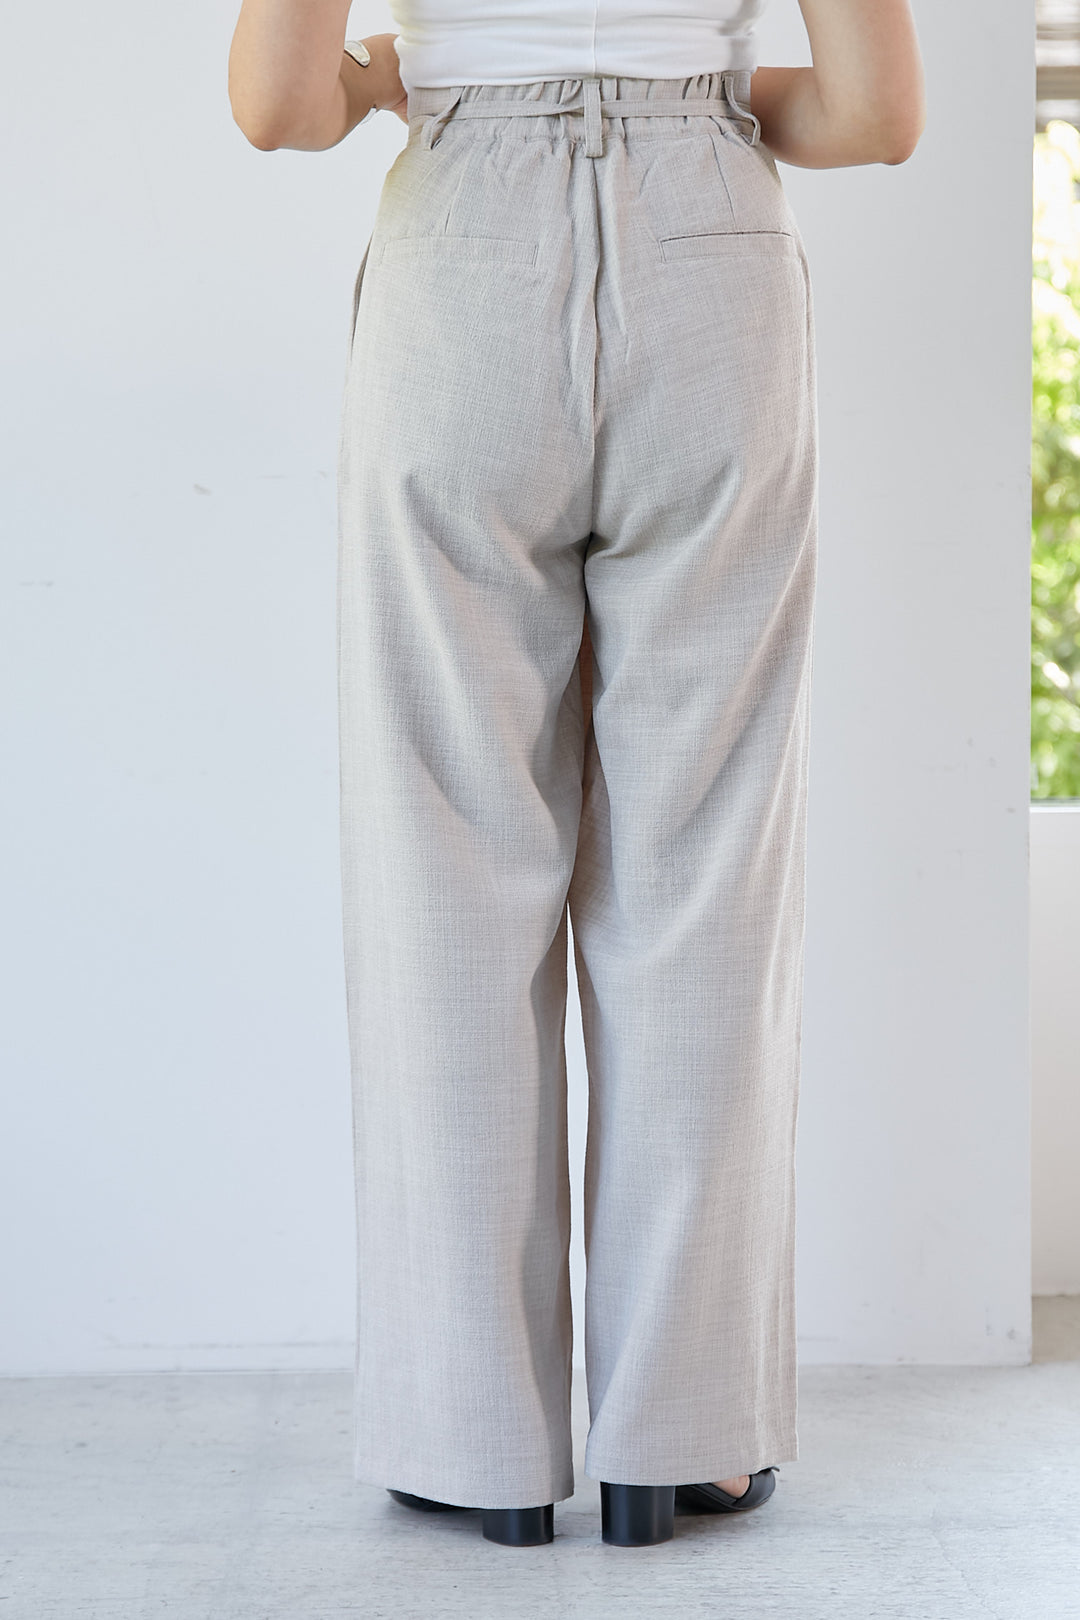 [Wrinkle prevention] Linen-like high-waisted pants